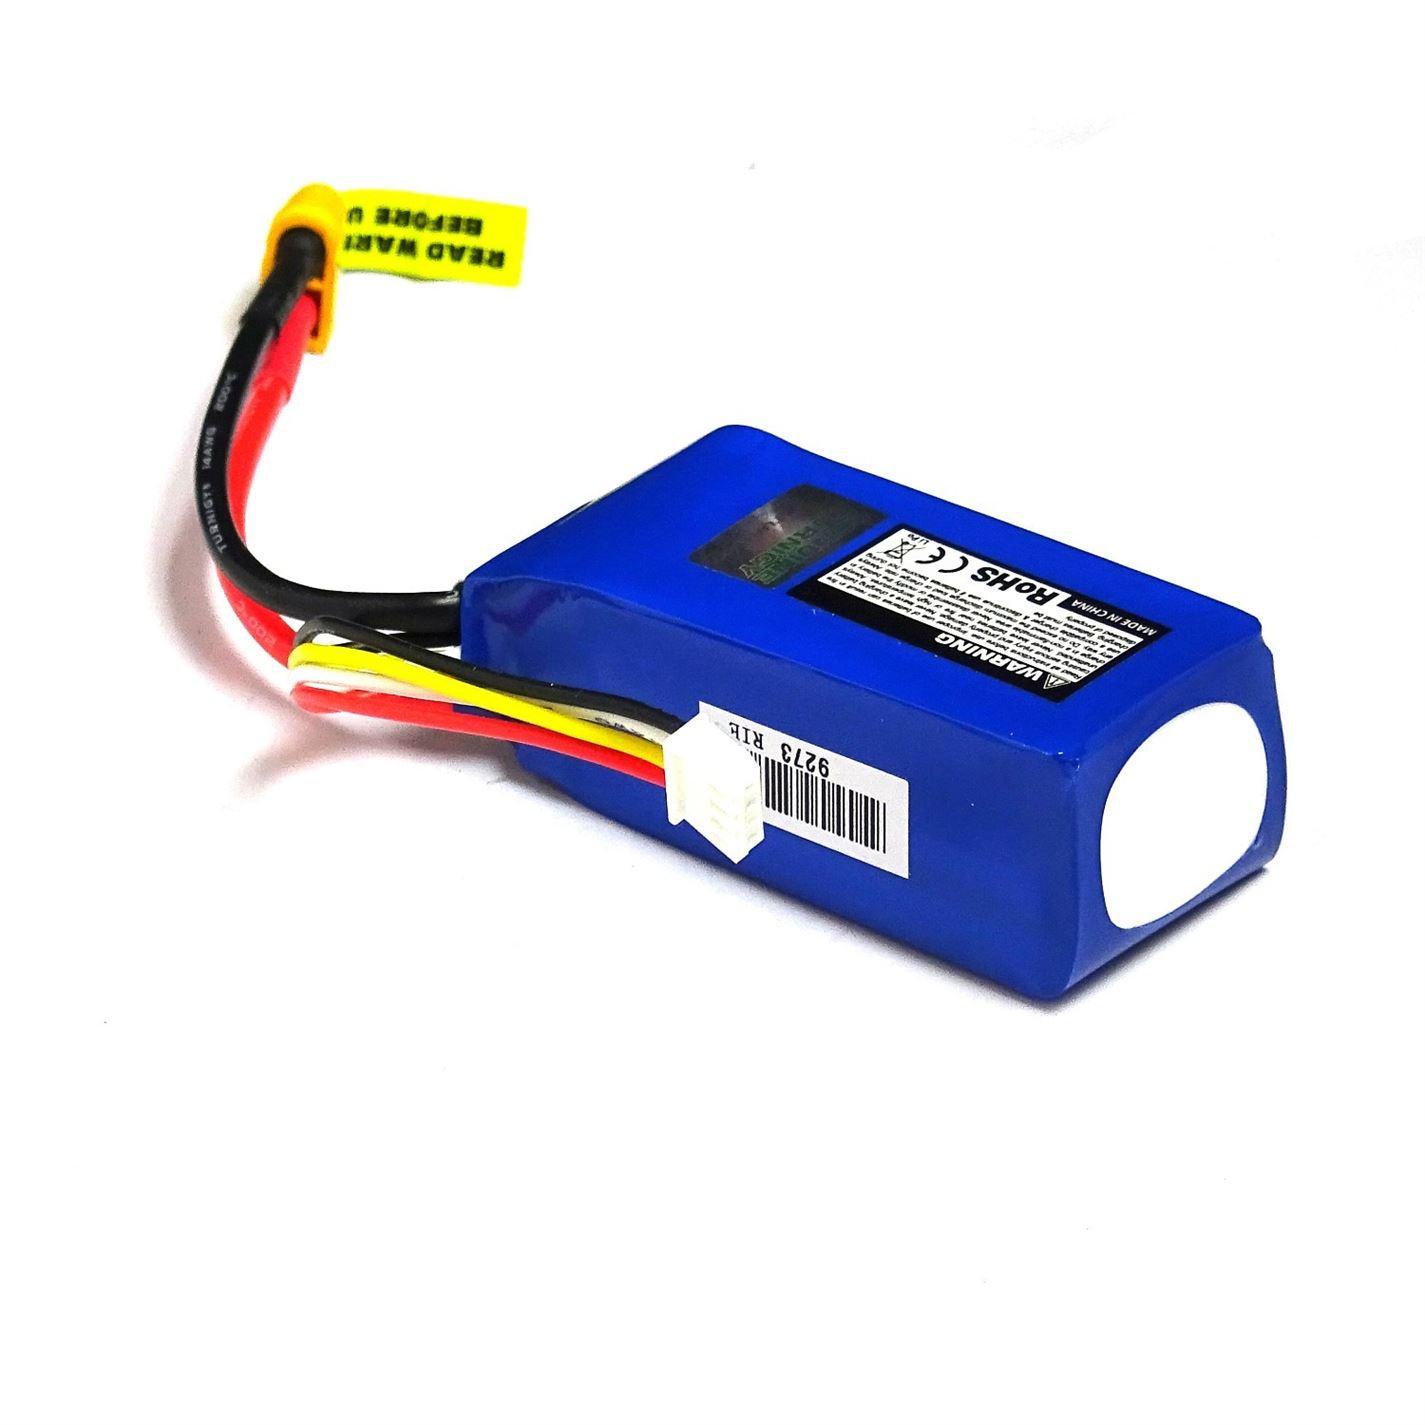 Turnigy 1500mAh 3S 20C Lipo Battery Pack - UK Seller